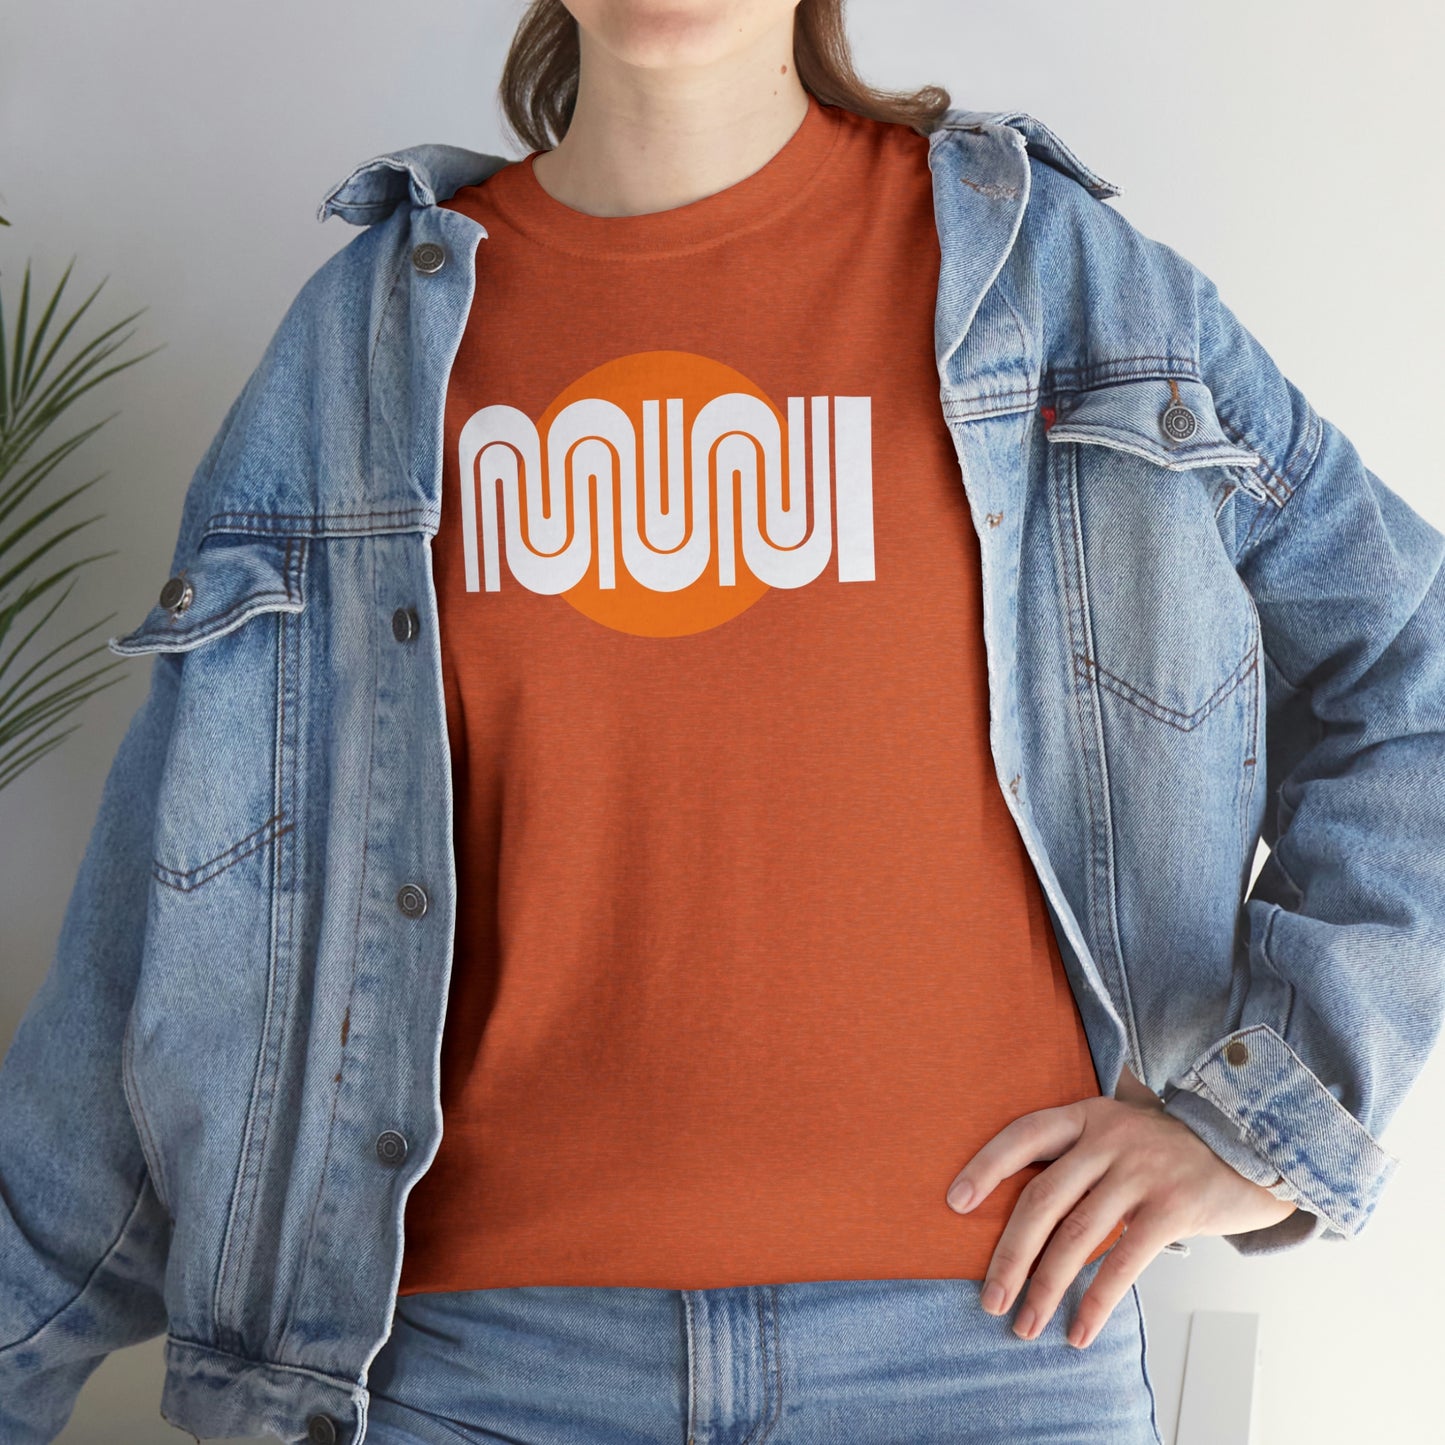 Muni Transit T-Shirt